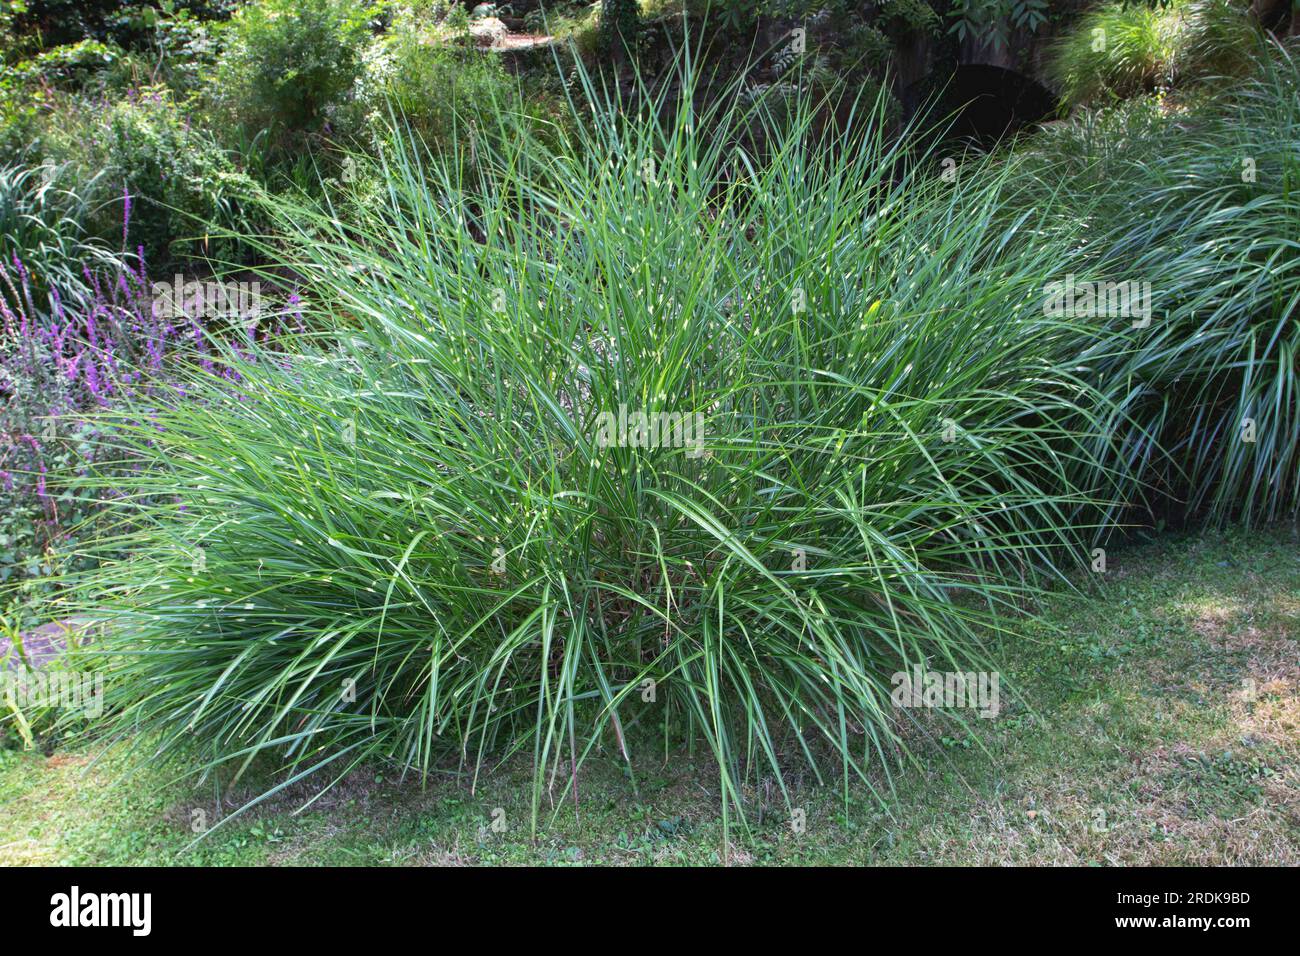 Miscanthus sinensis var zebrinus ornamental grass. Zebra grass plant with striped arching foliage. Stock Photo